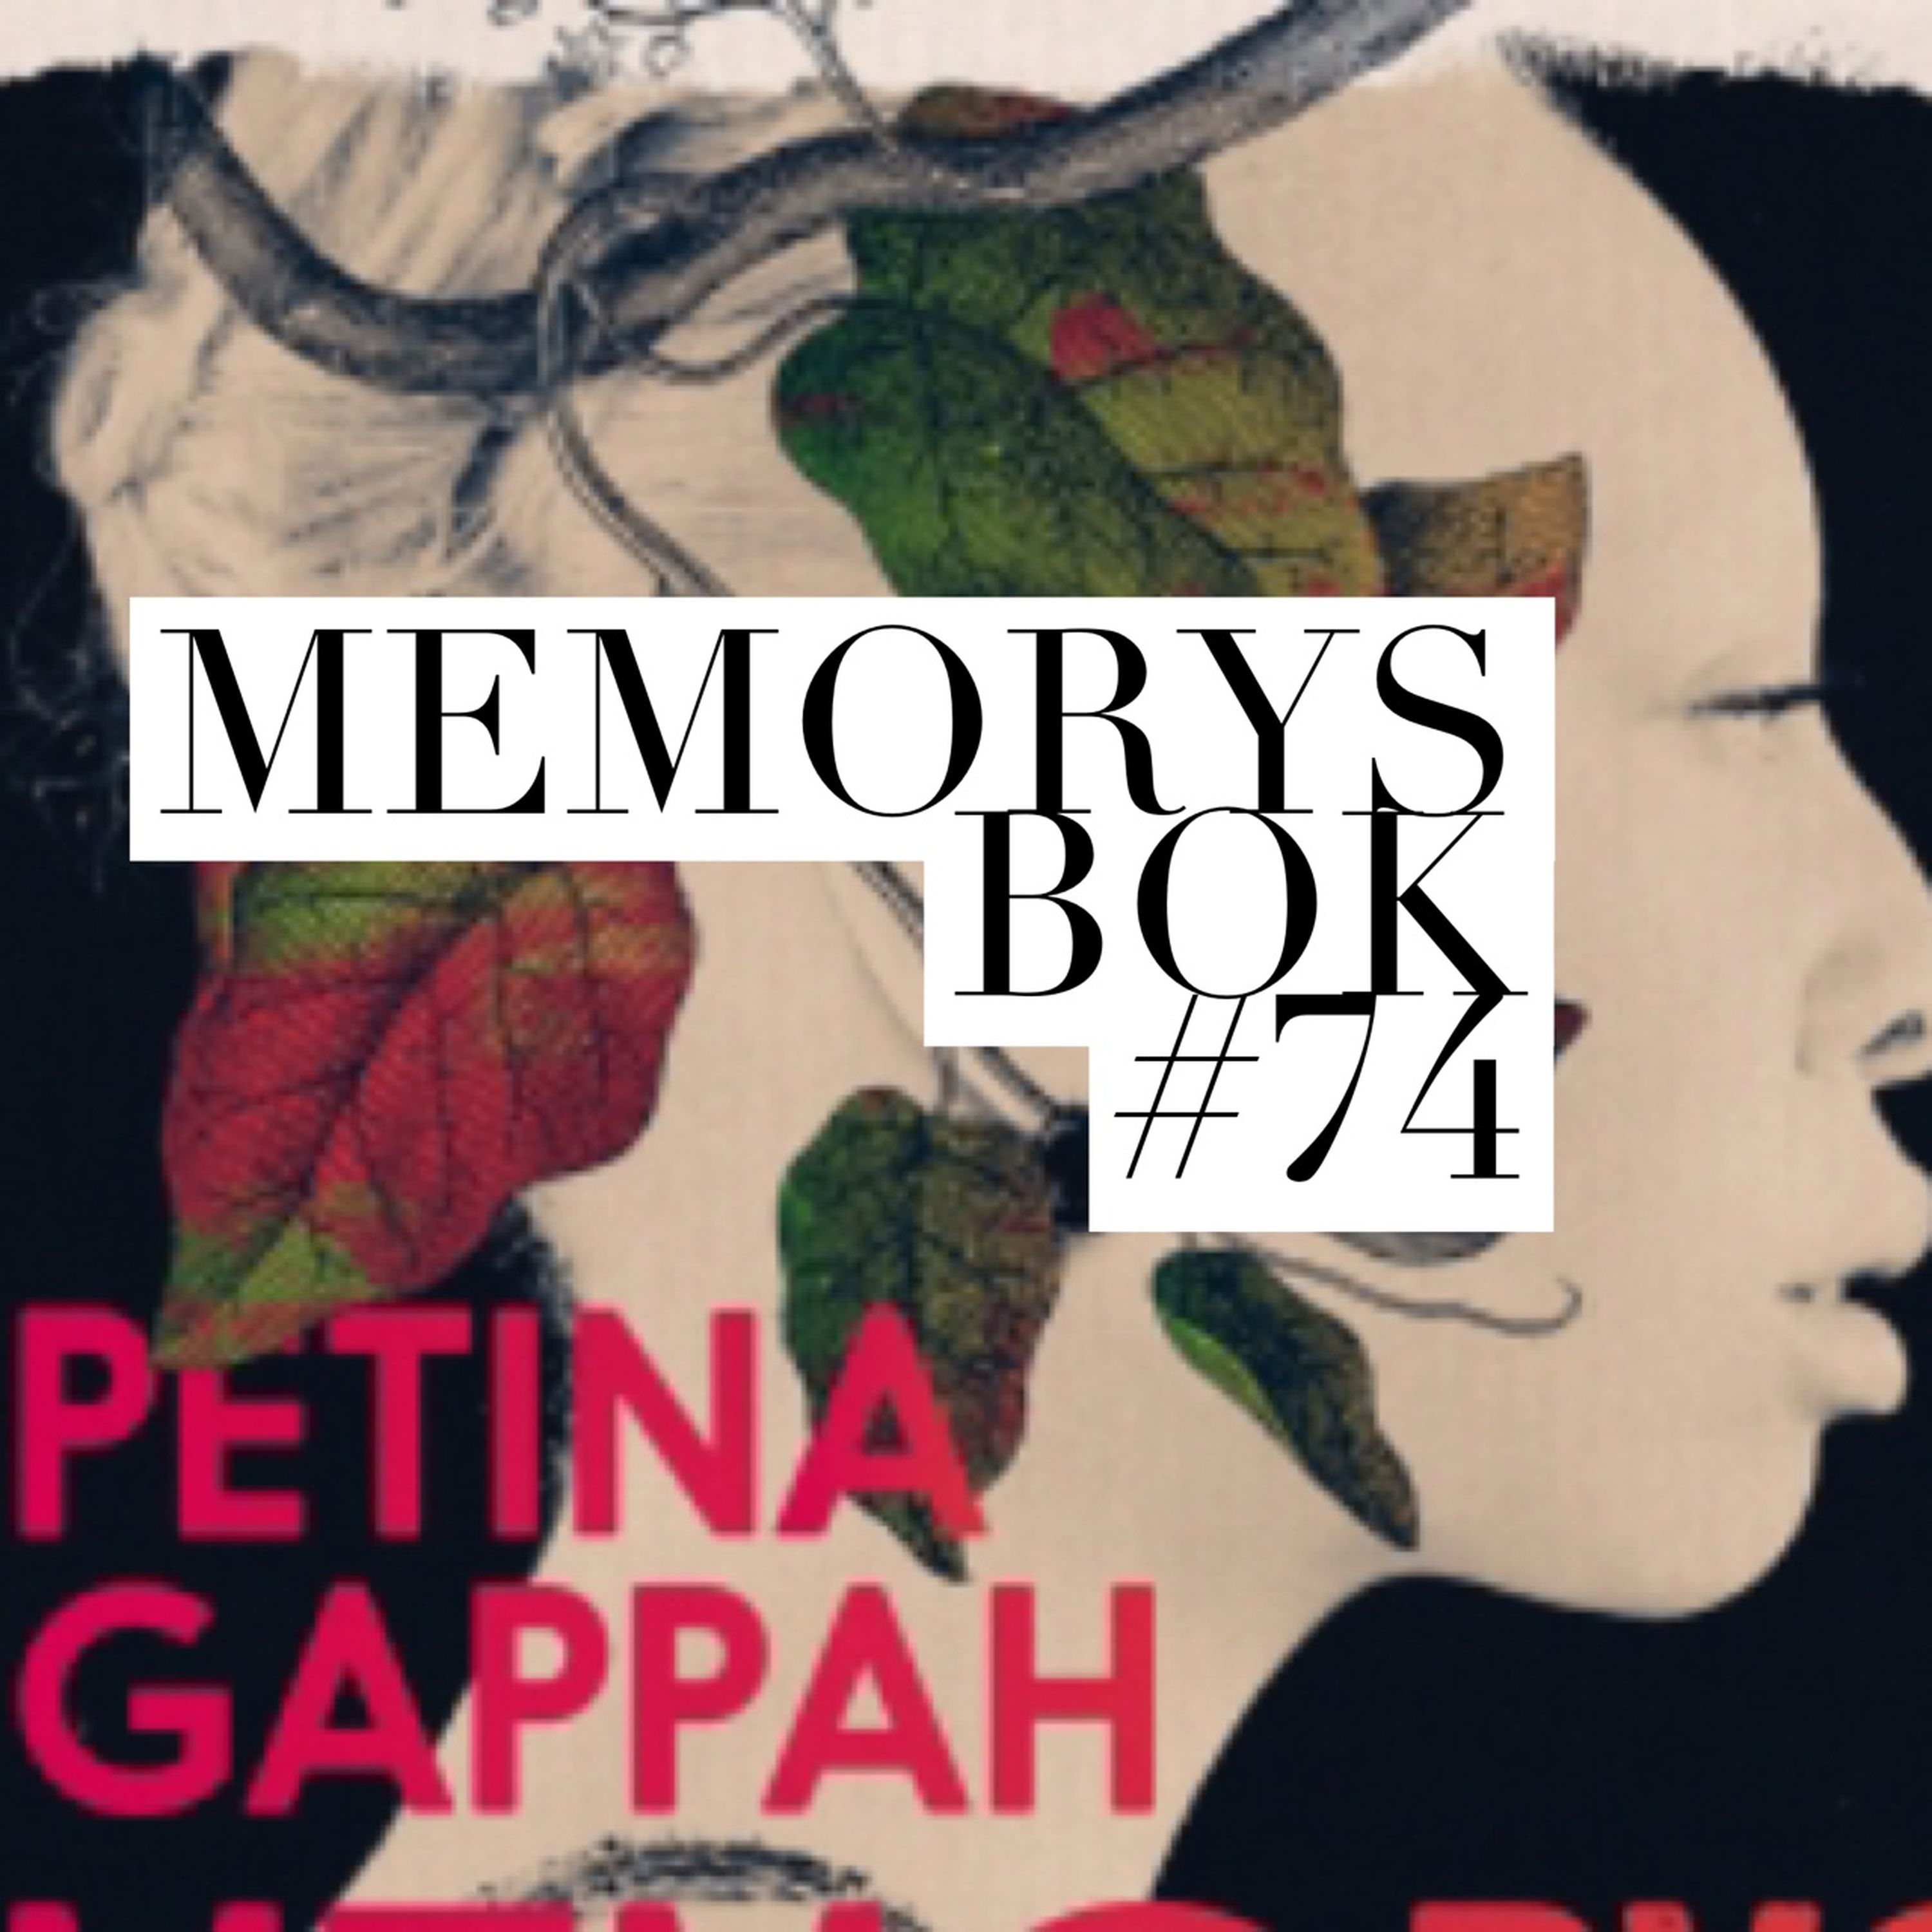 Memorys bok #74